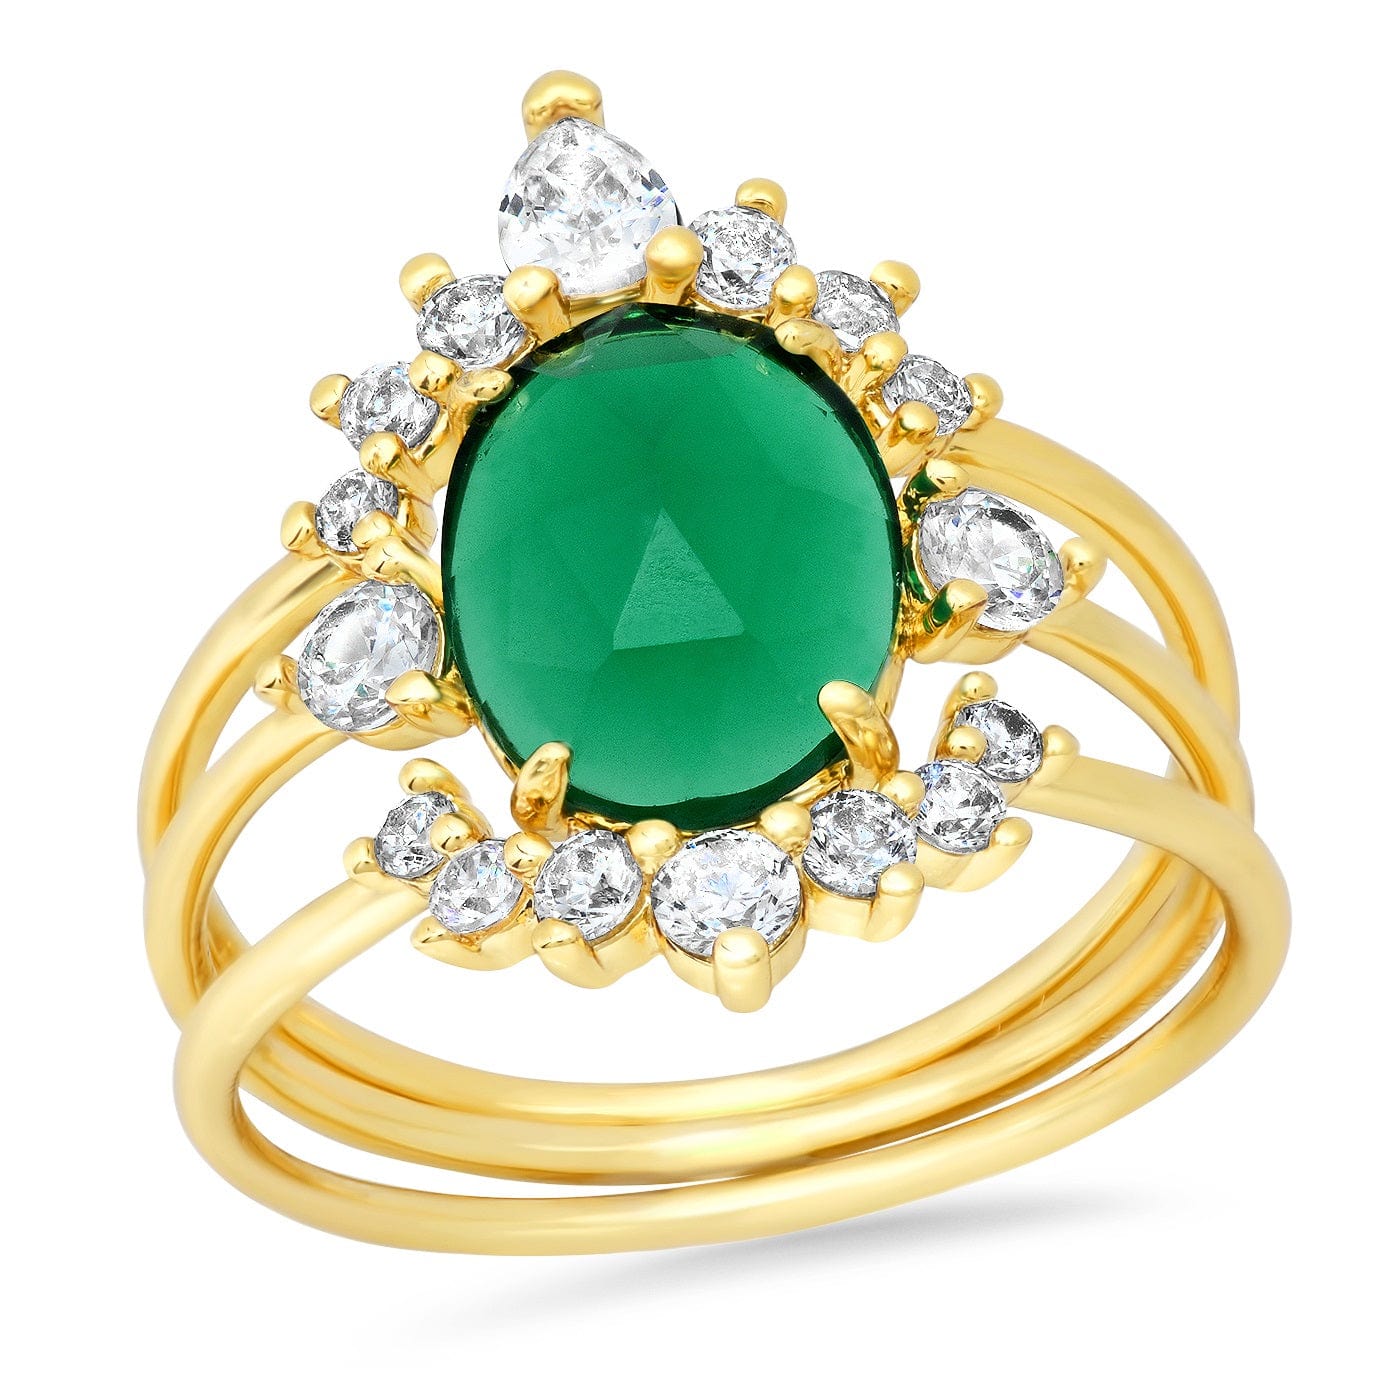 TAI JEWELRY Rings May / 6 Three Piece Vintage Inspired Birthstone Ring